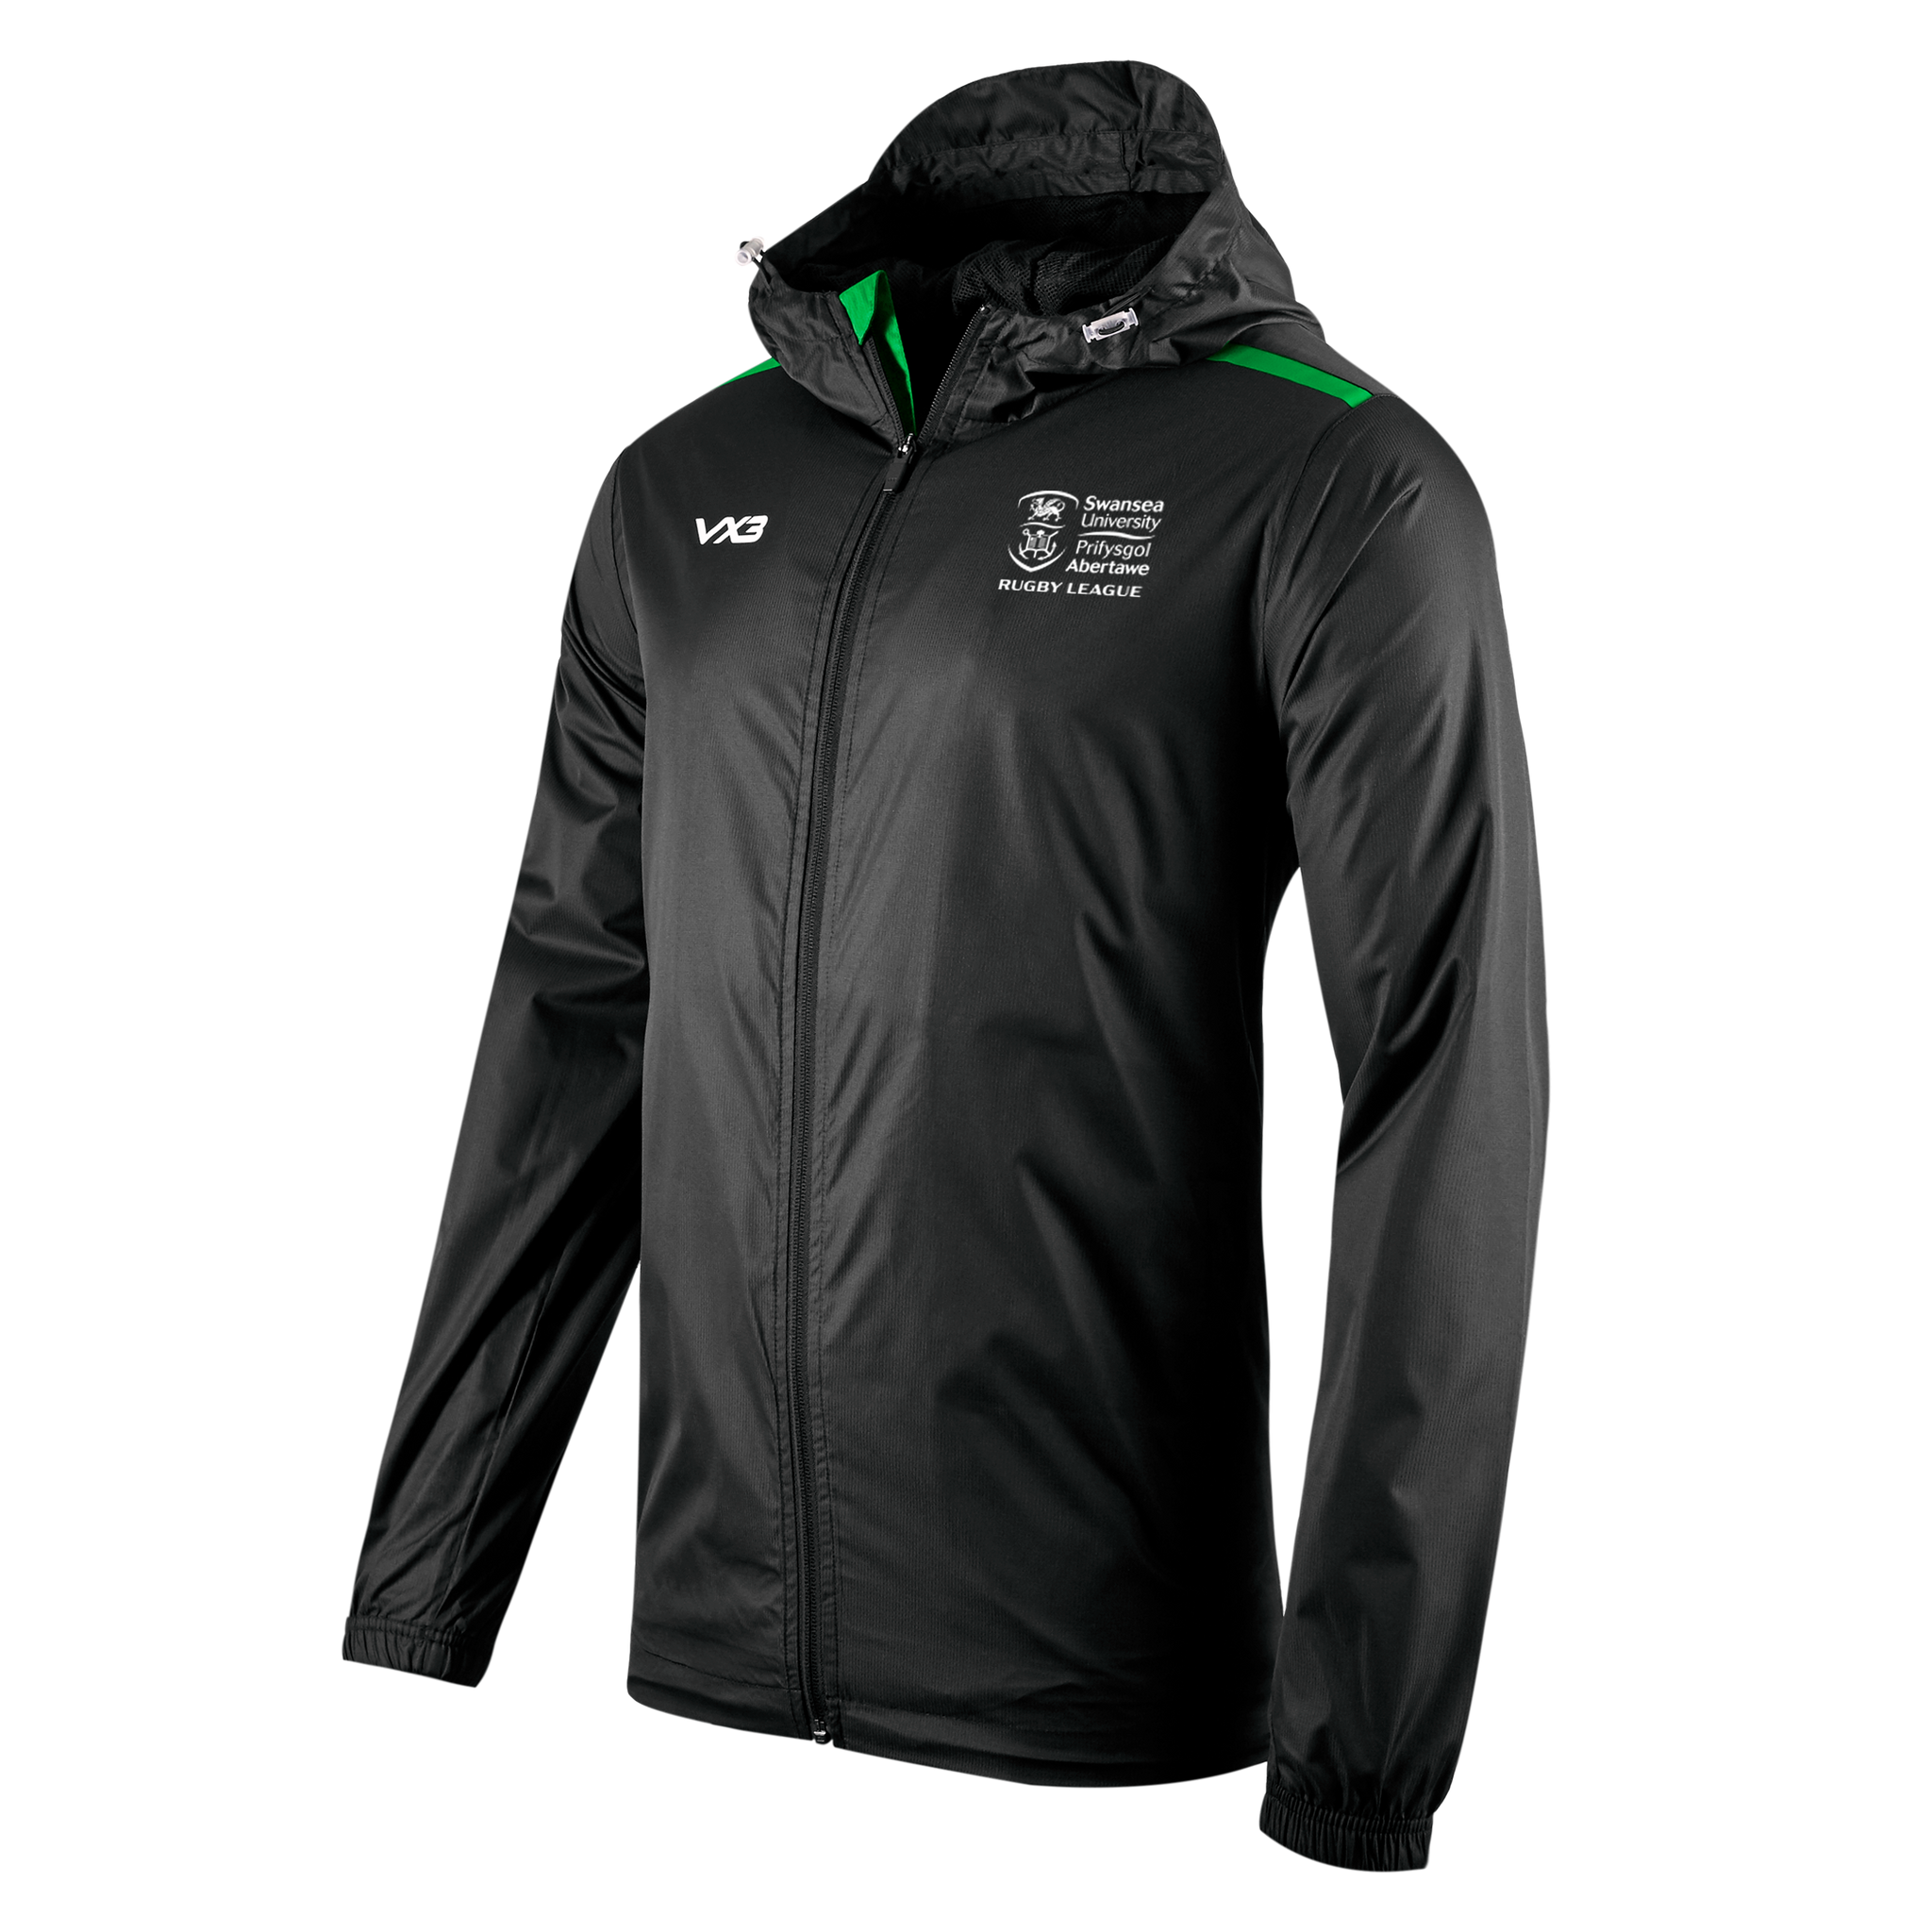 Swansea University Rugby League Fortis Full Zip Rain Jacket